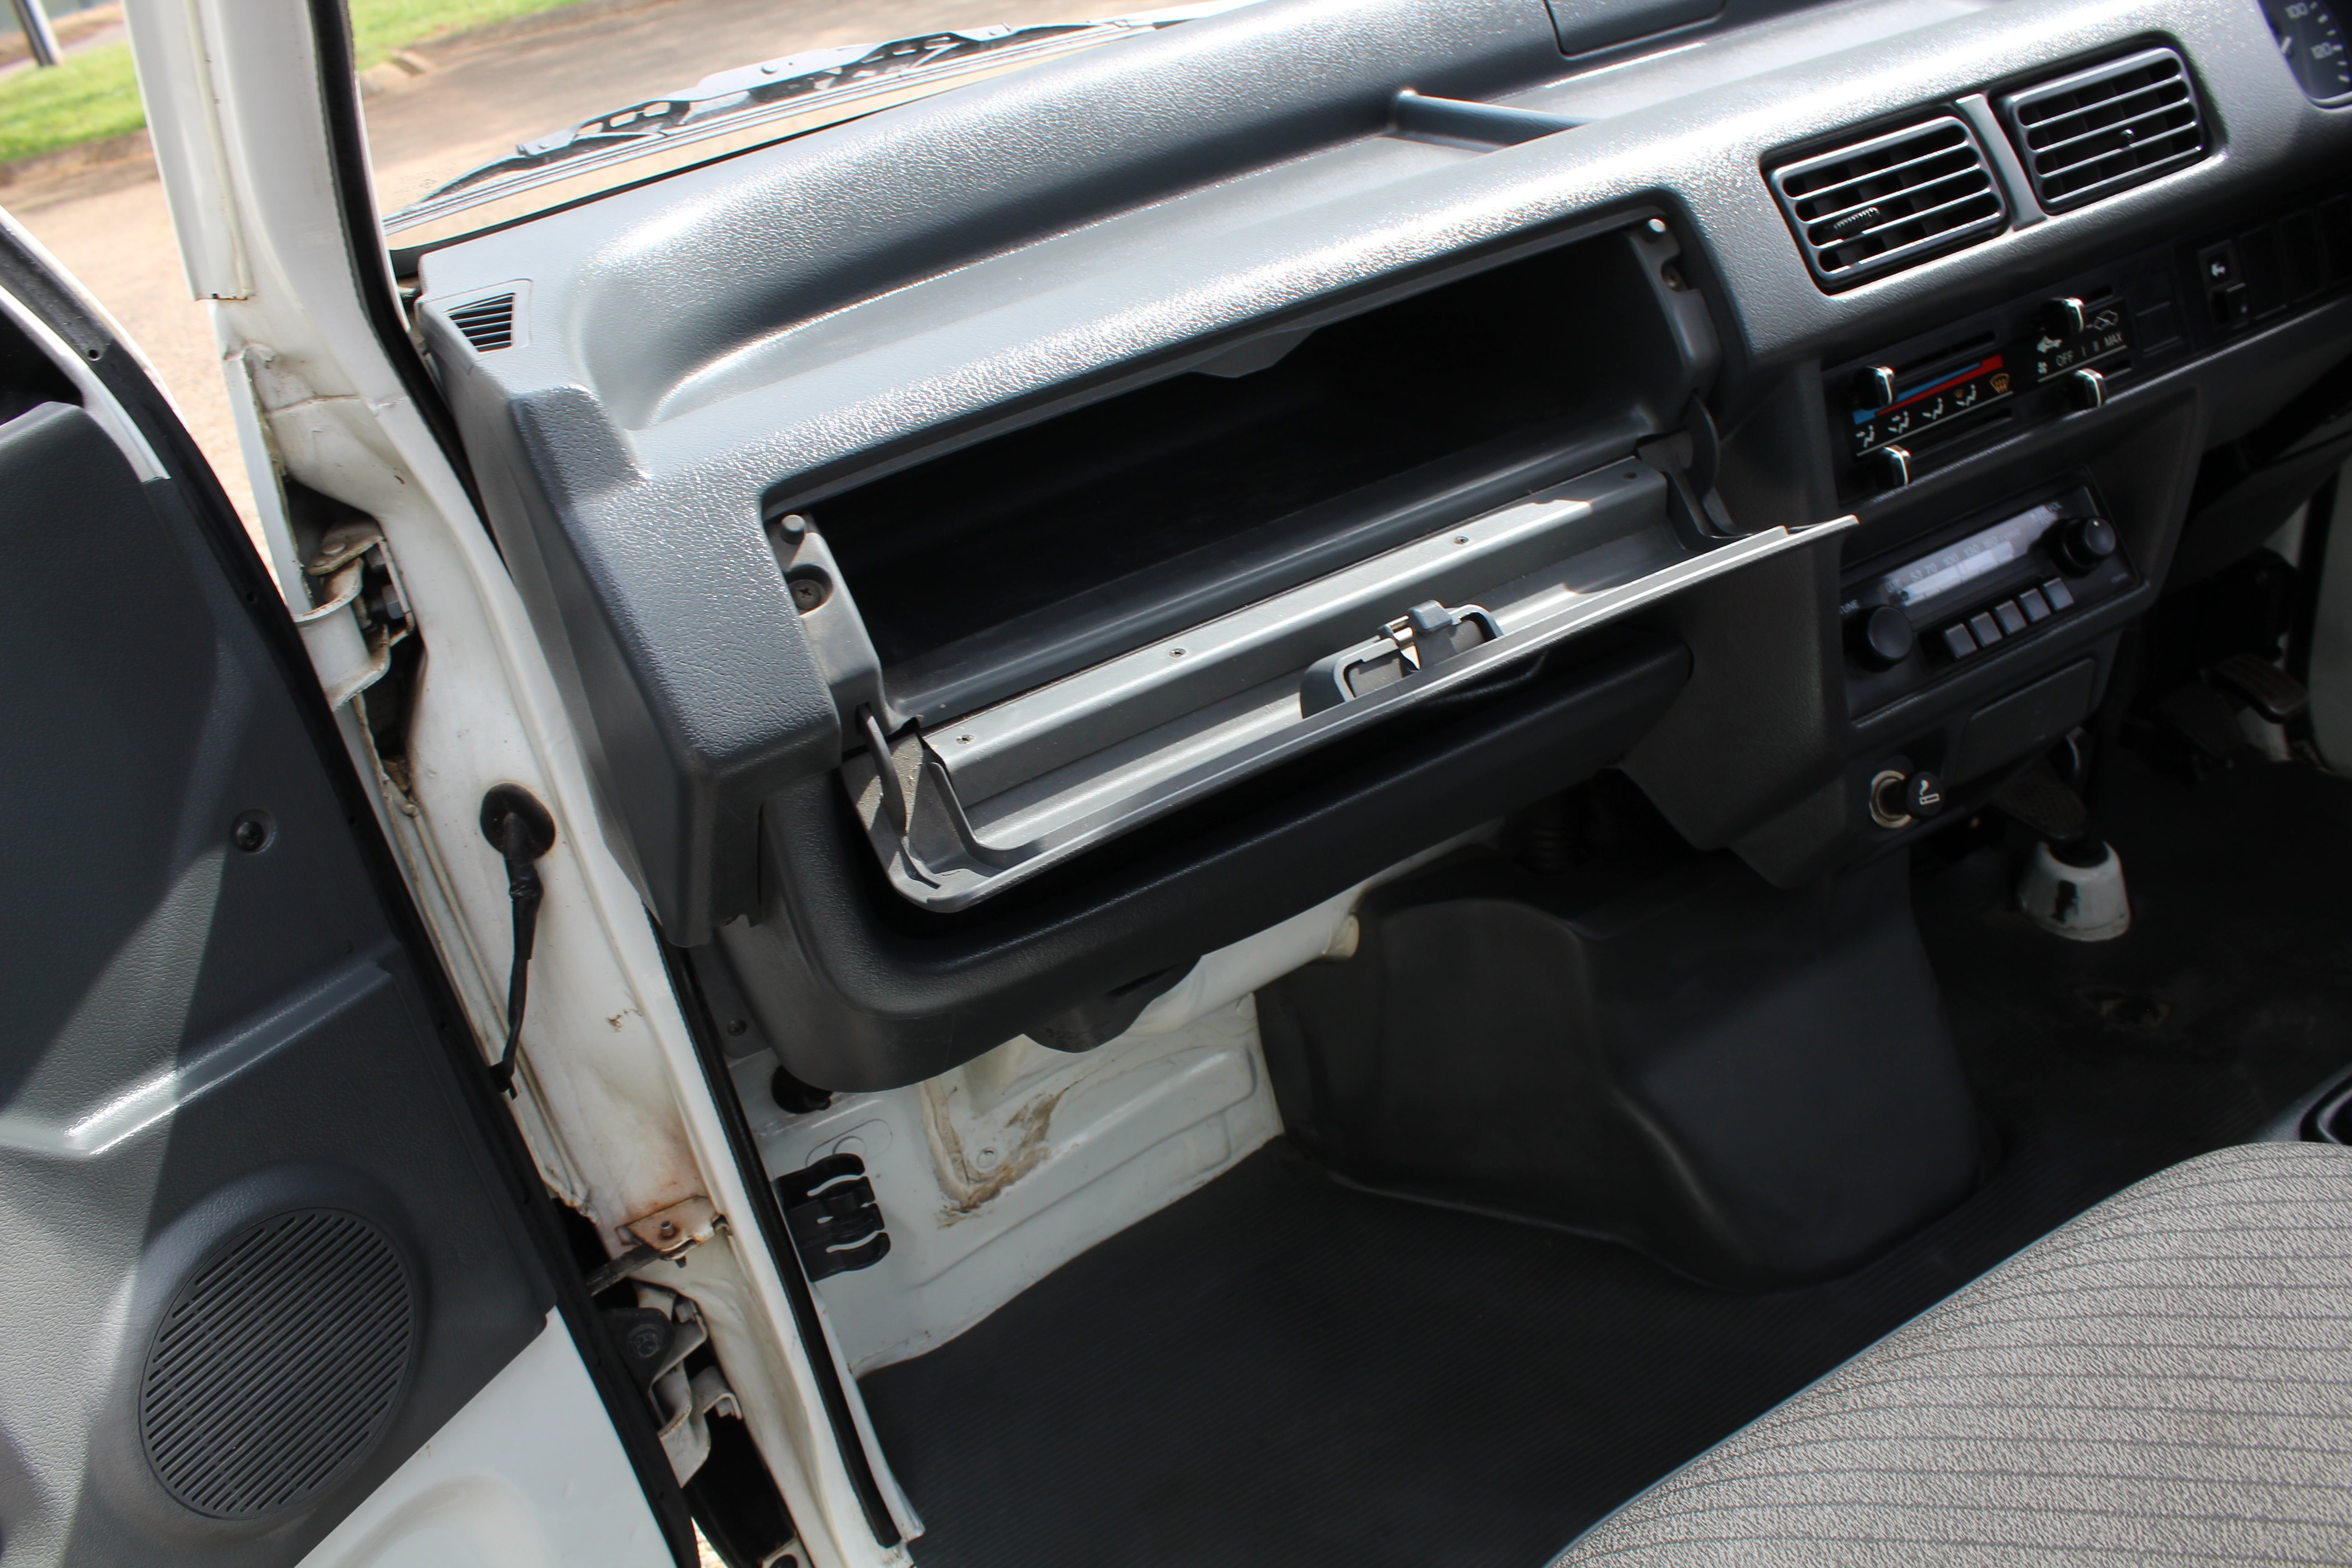 JDM 94 Honda Acty SDX Real Time AWD Mini Truck Manual Street Legal